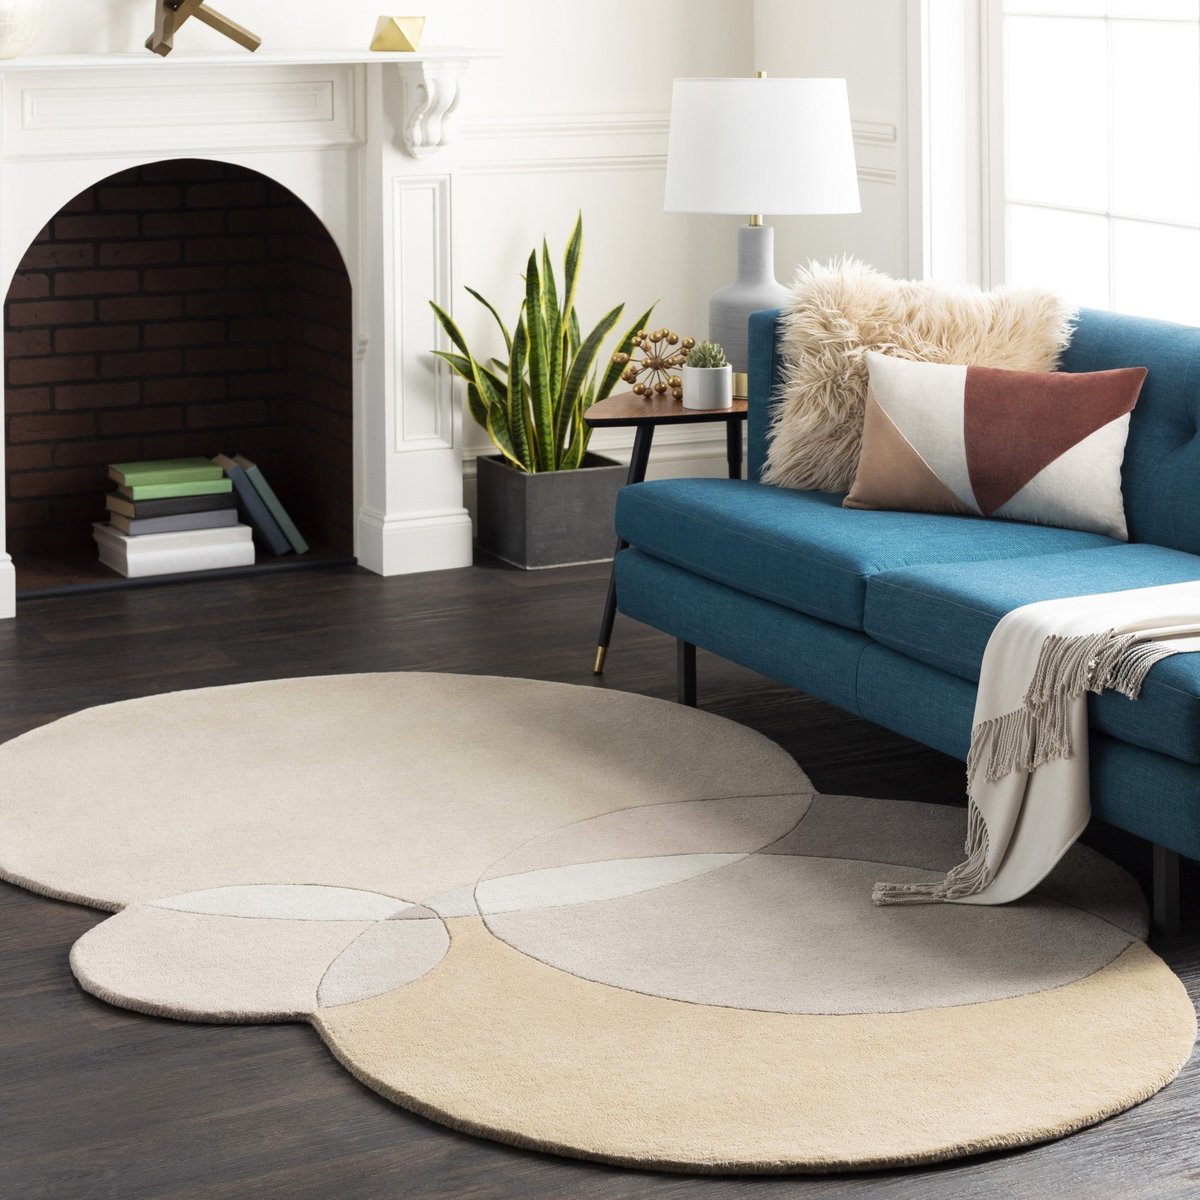 Cool and Calm - Modern Living Room Decor Ideas